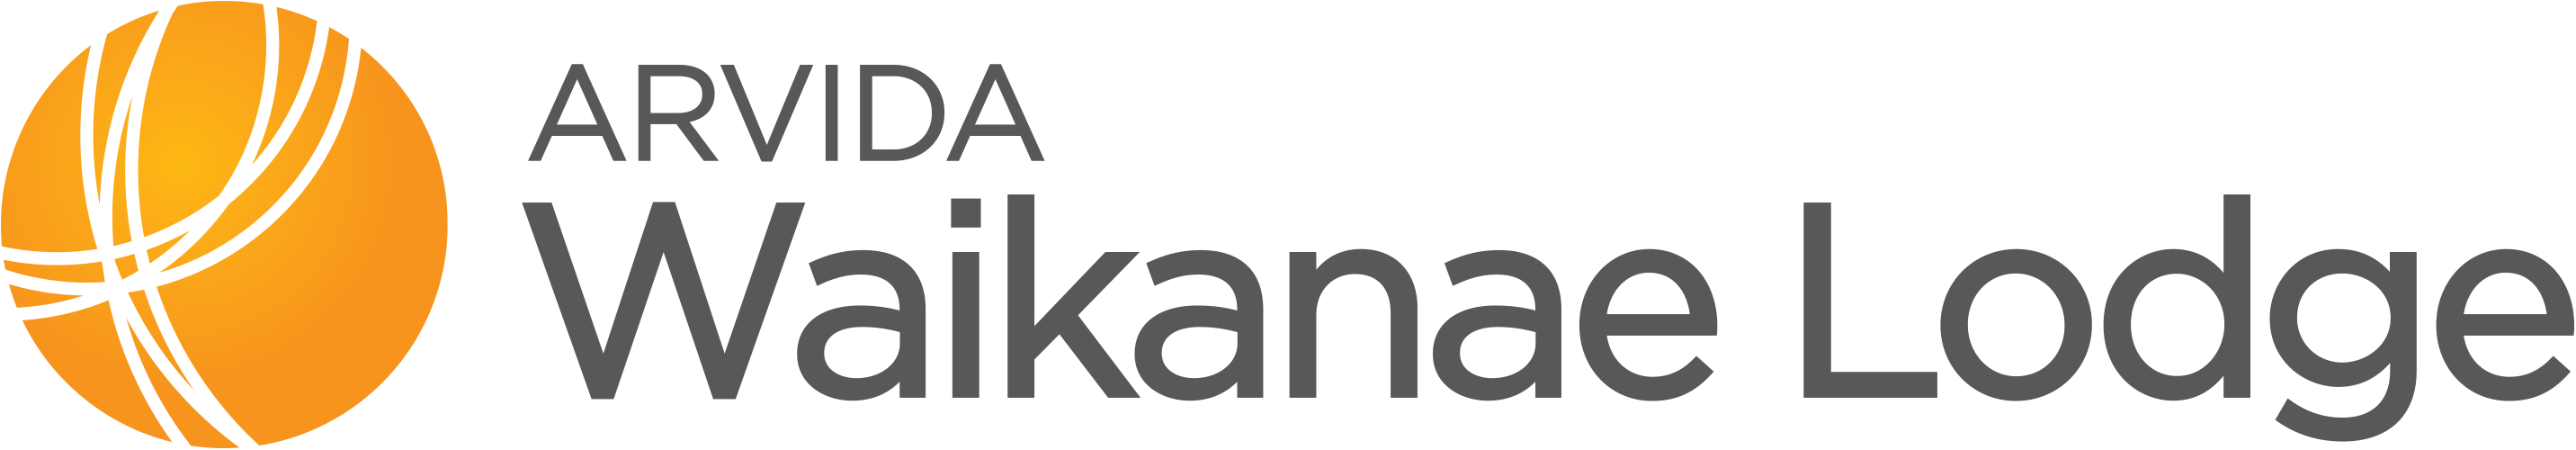 Waikanae Lodge | Arvida logo